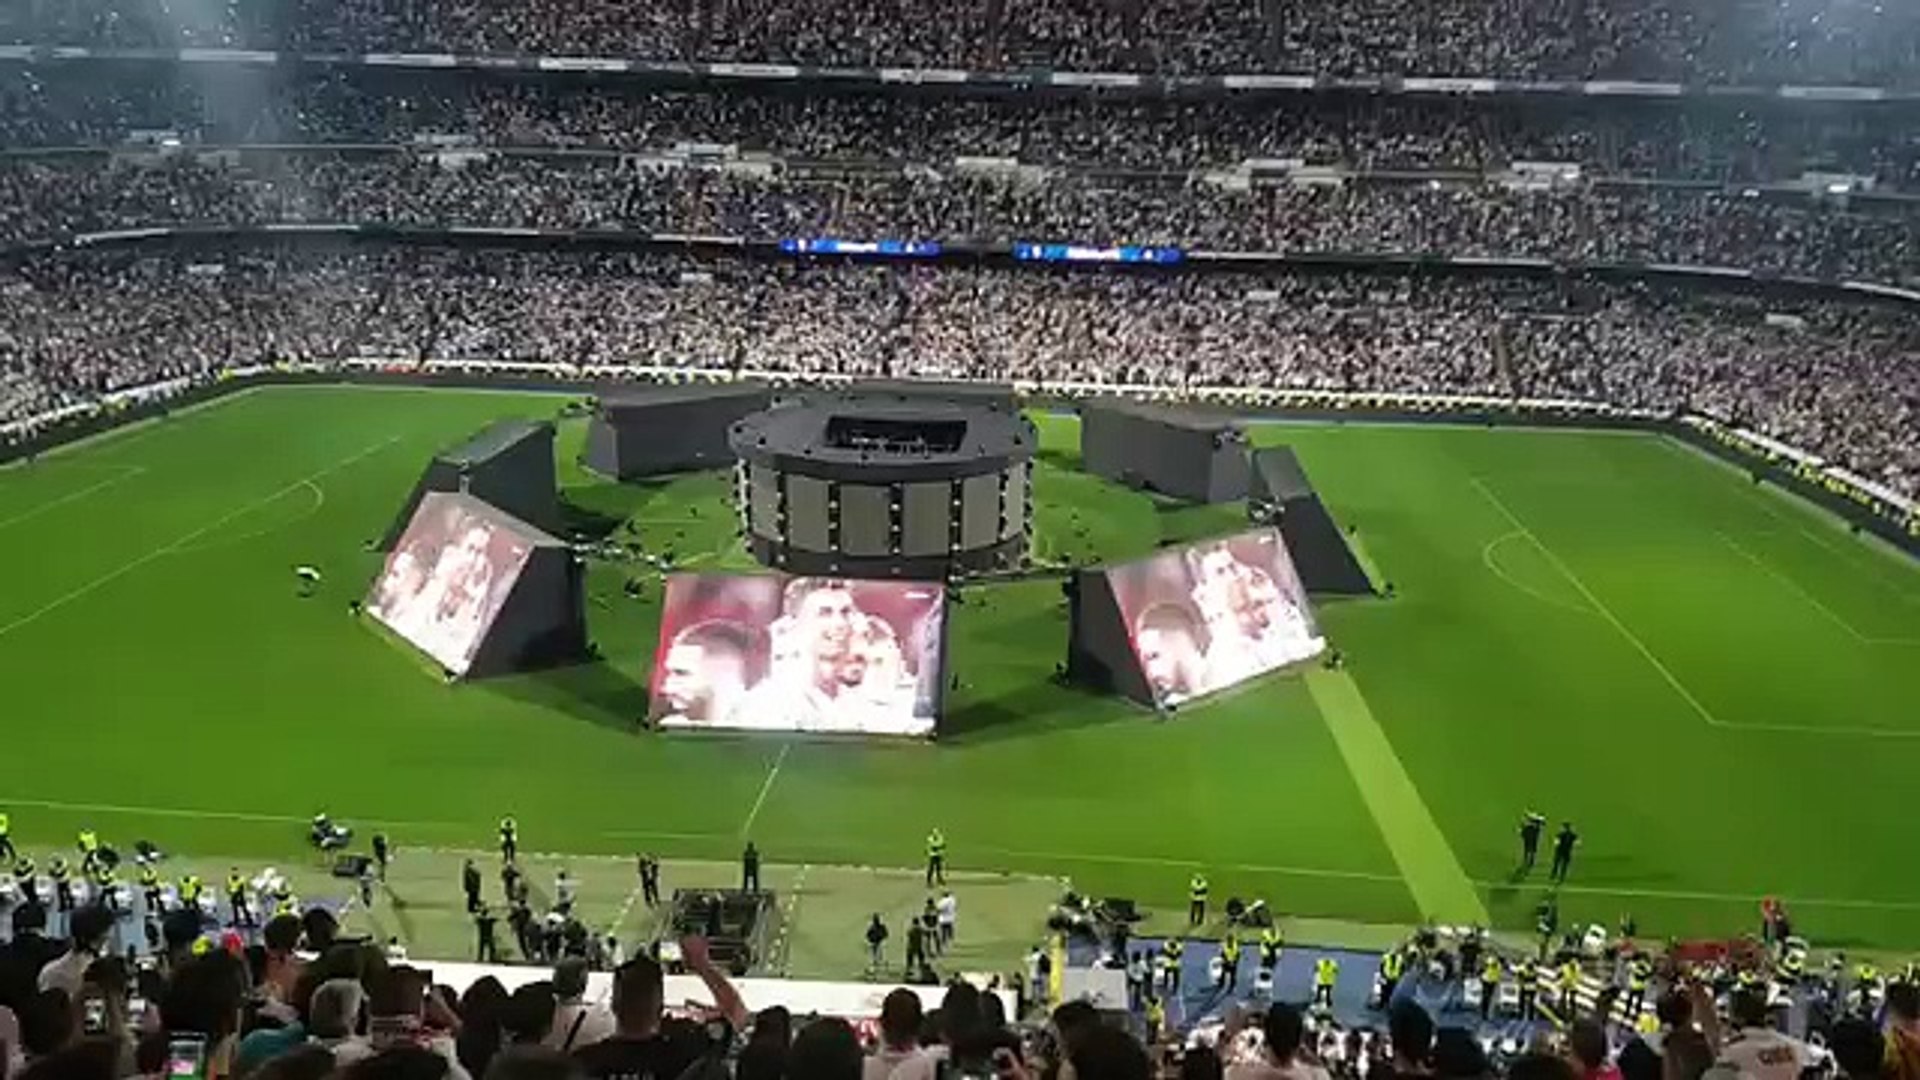 Real Madrid fans celebrate Champions League win at Santiago Bernabéu -  Vidéo Dailymotion